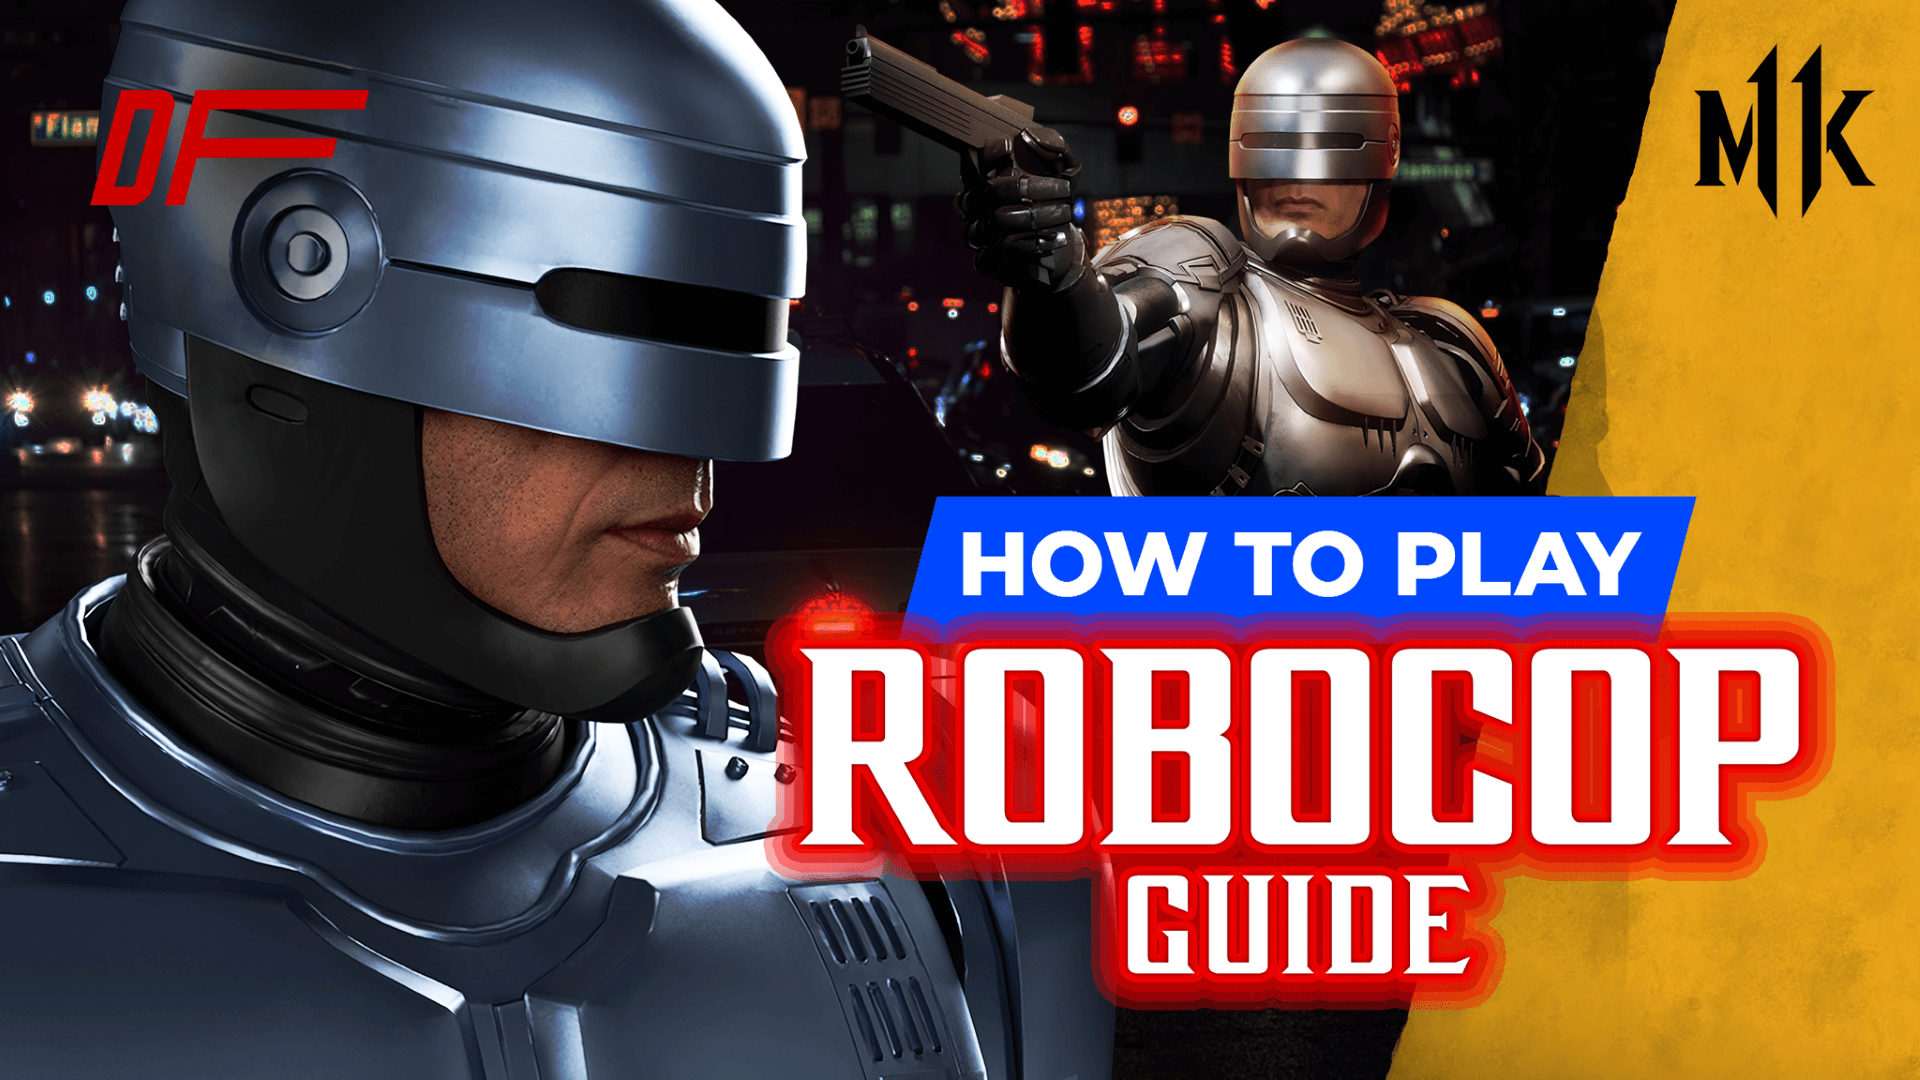 Mortal Kombat 11 RoboCop Guide Featuring A F0xy Grampa